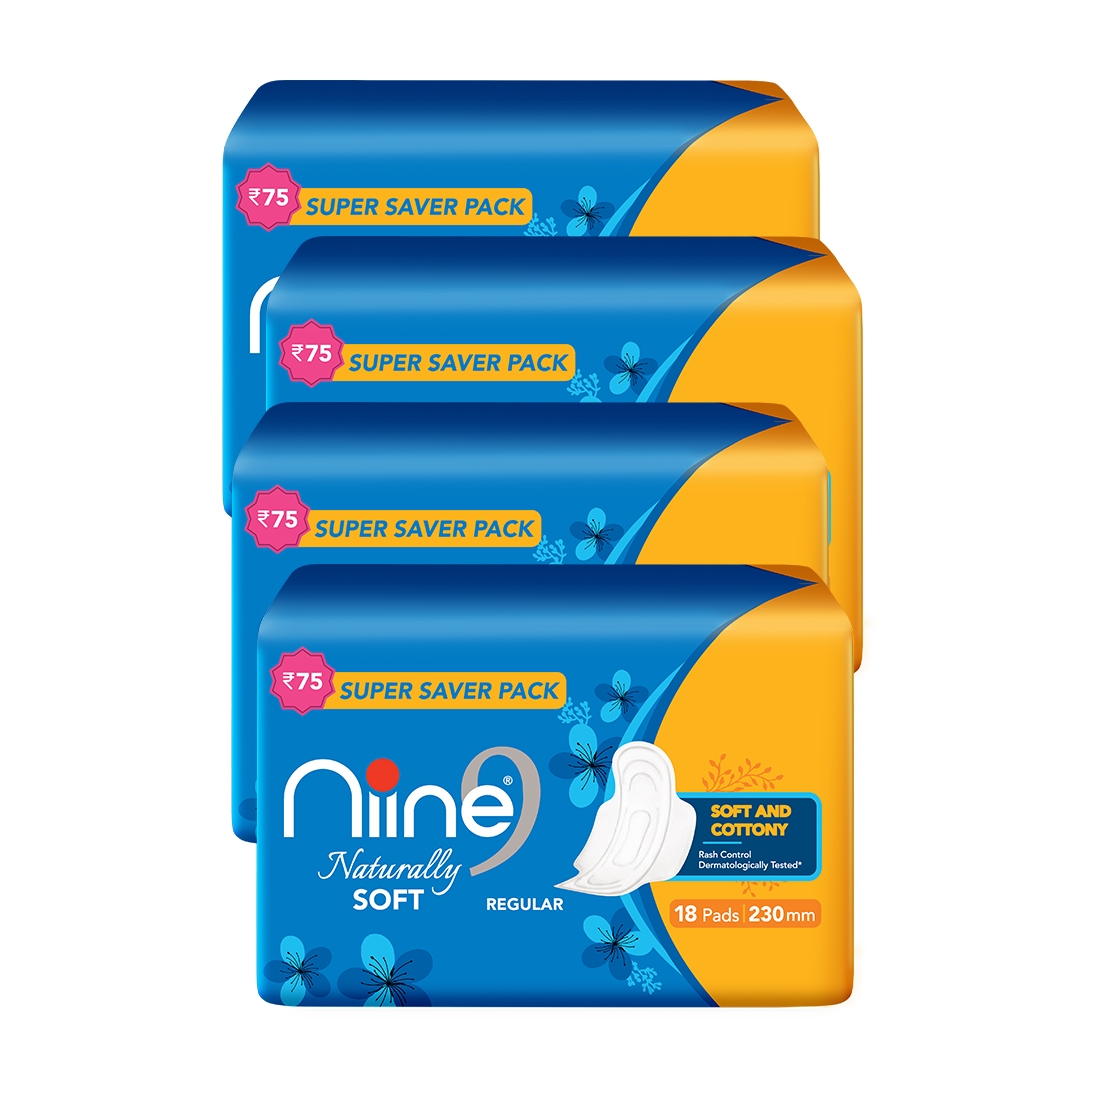 NIINE | Niine Naturally Soft Regular SUPER SAVER PACK Sanitary Napkins for Women 0